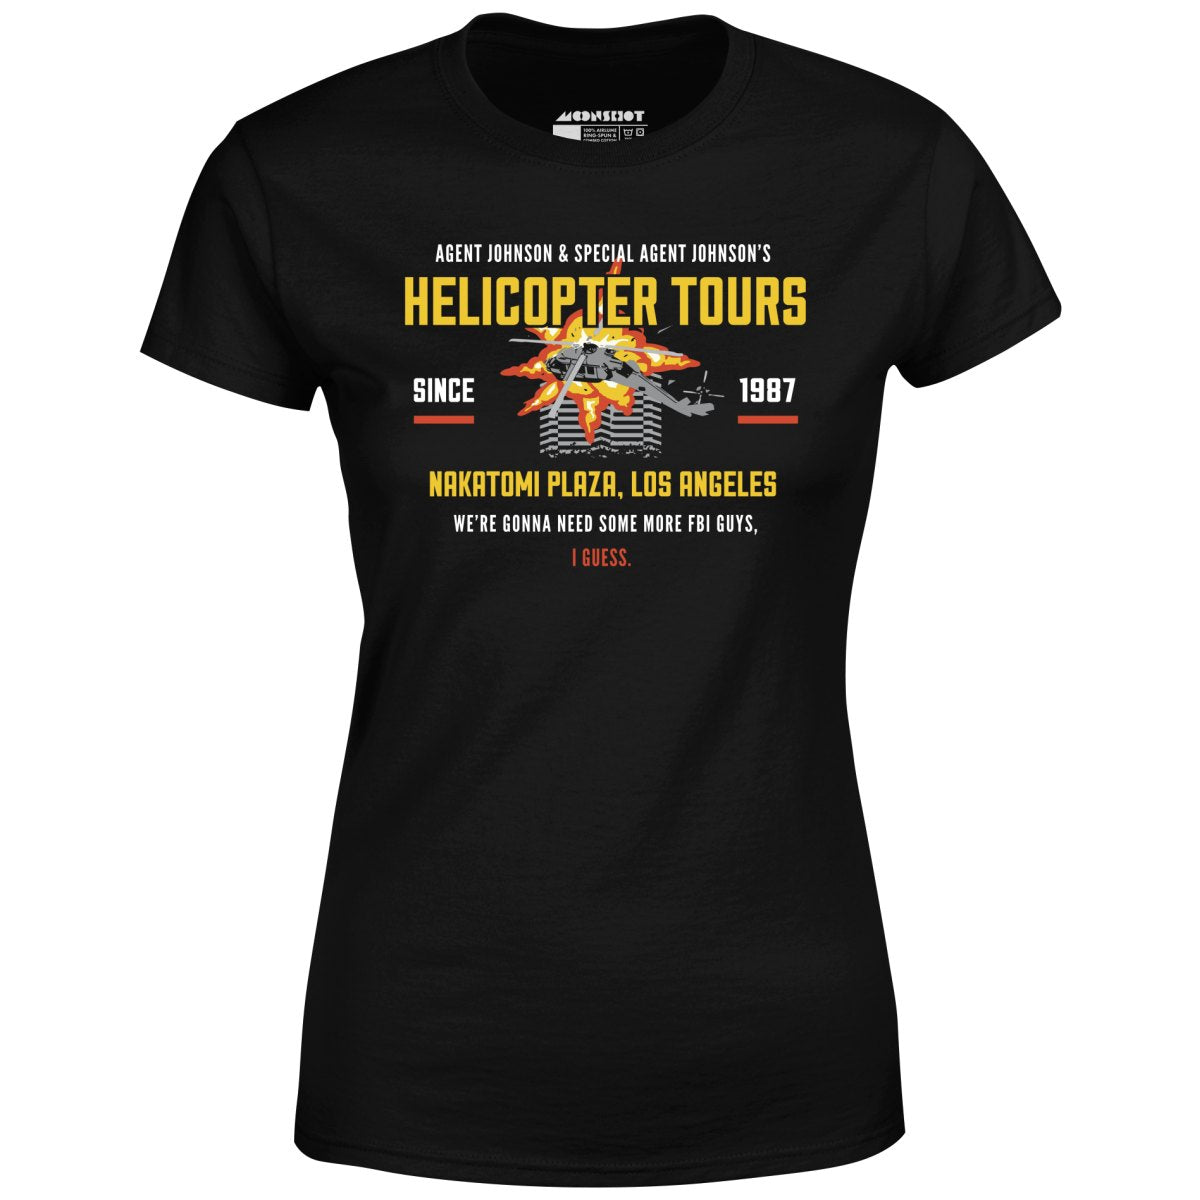 Agent Johnson & Johnson's Helicopter Tours - Die Hard - Women's T-Shirt